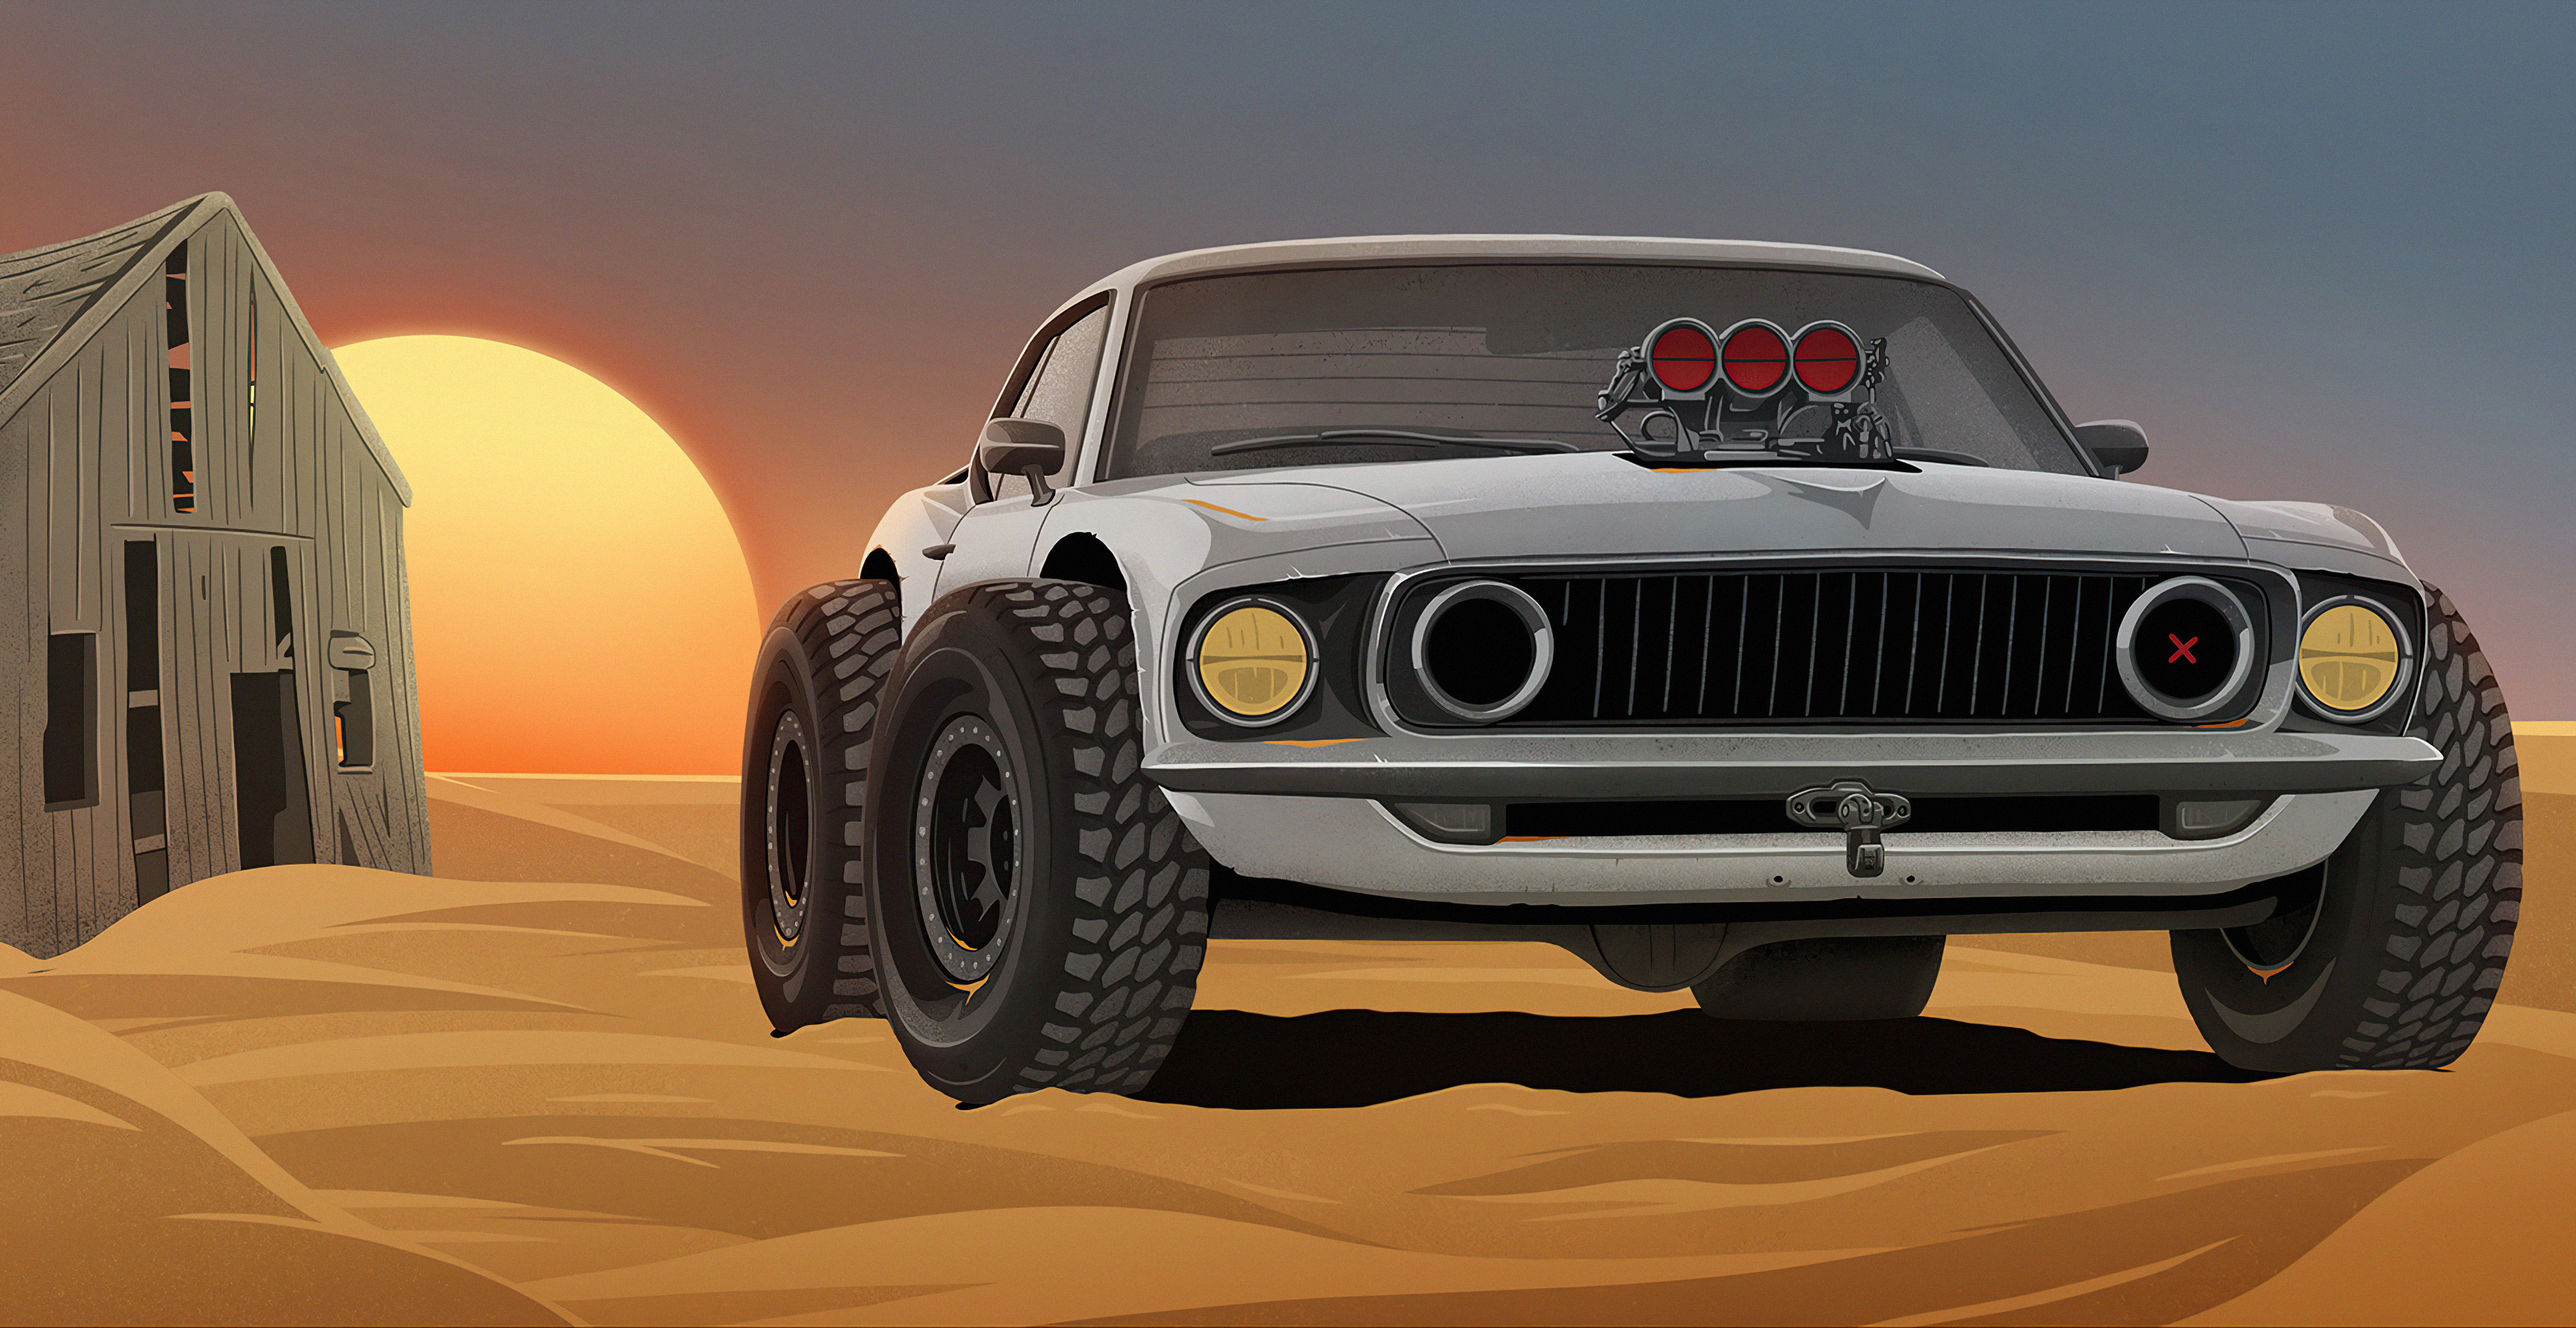 Car In Desert Wallpapers